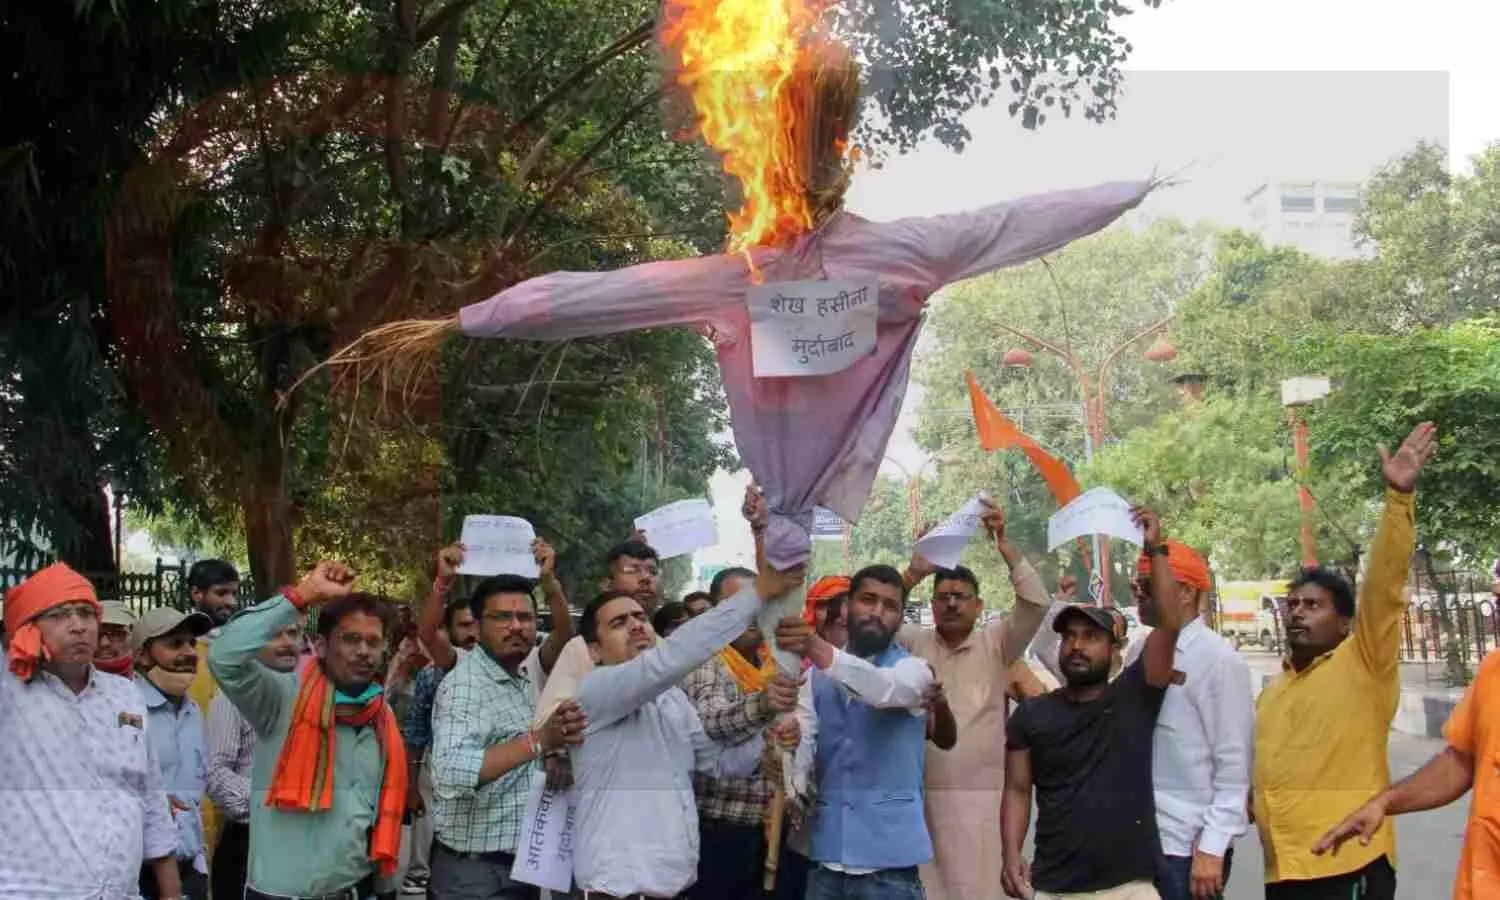 Vishwa Hindu Parishad activists burn effigy of Bangladesh Prime Minister Sheikh Hasina